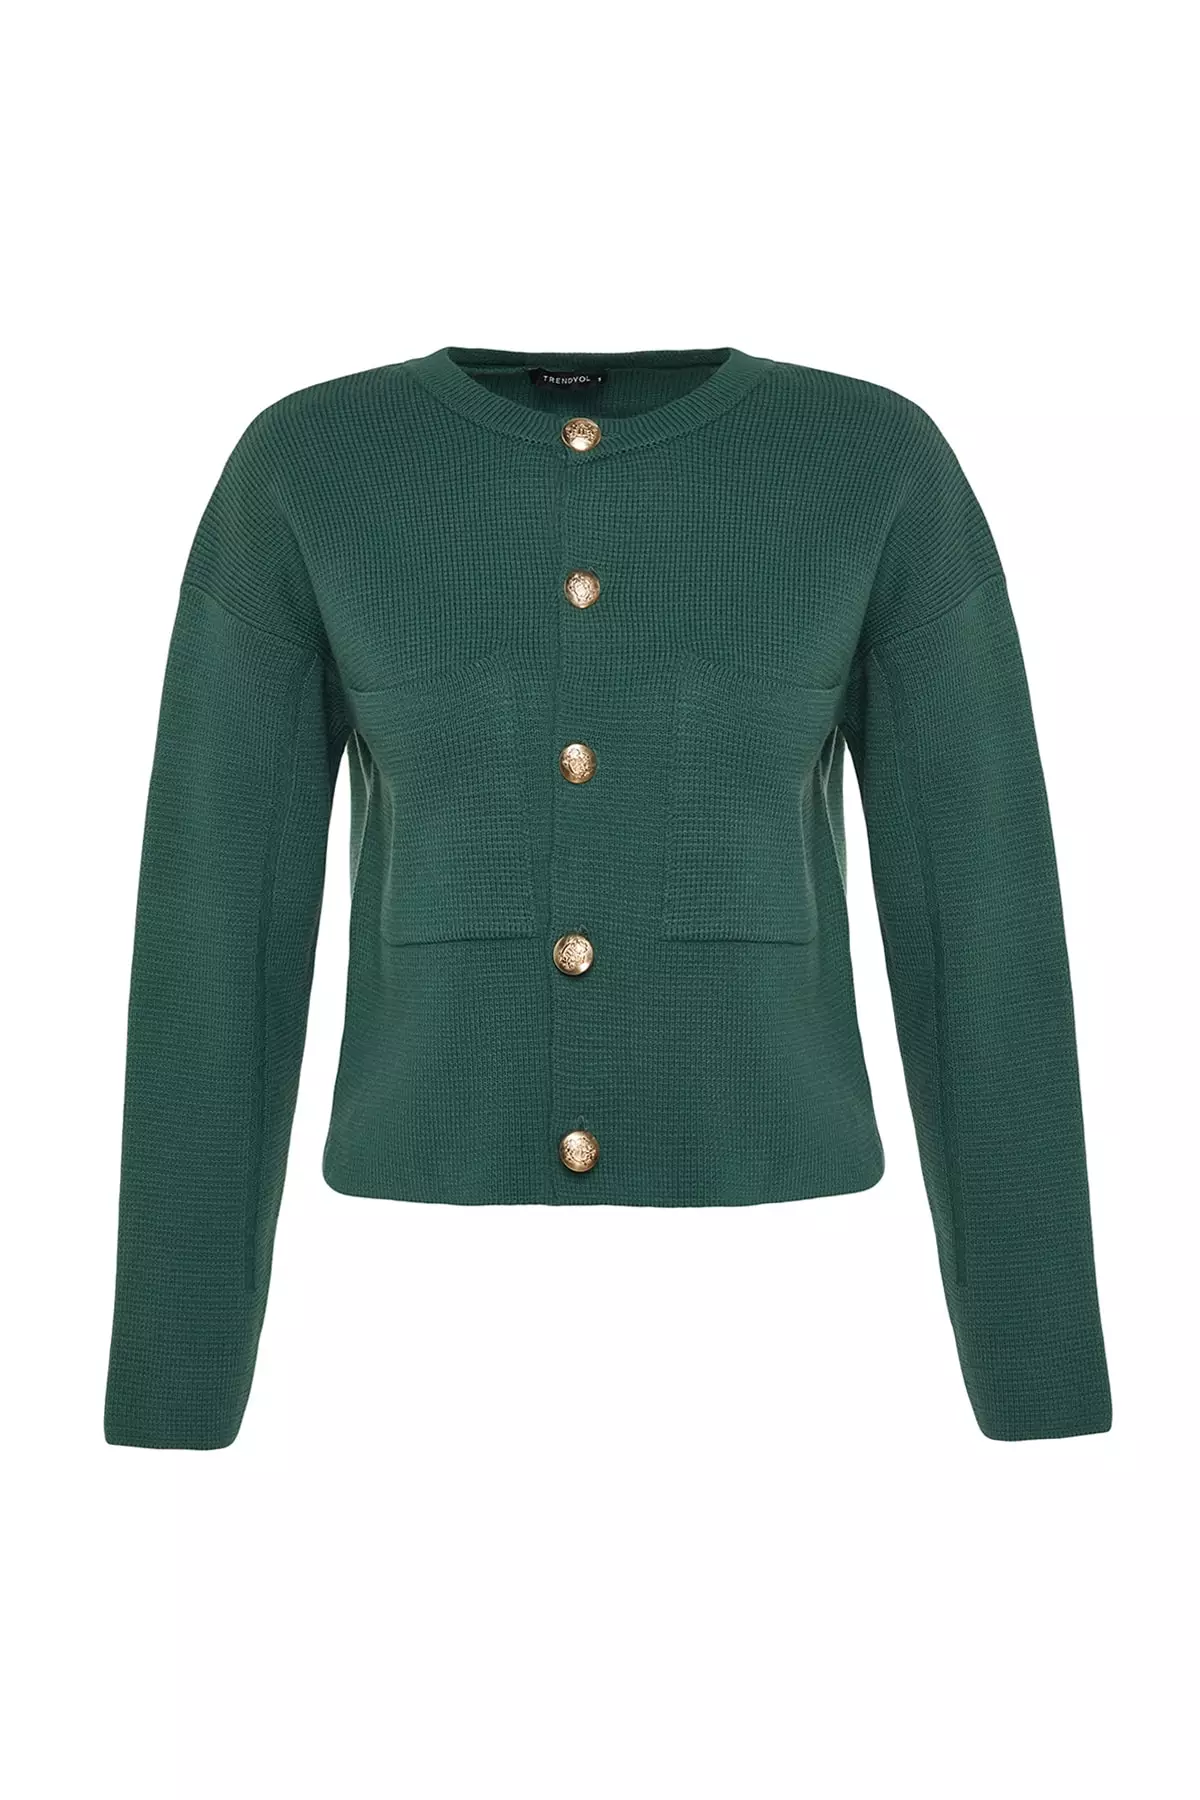 Lazy Matcha Green Loose Soft Glutinous Small Weaving Sweater Jacket